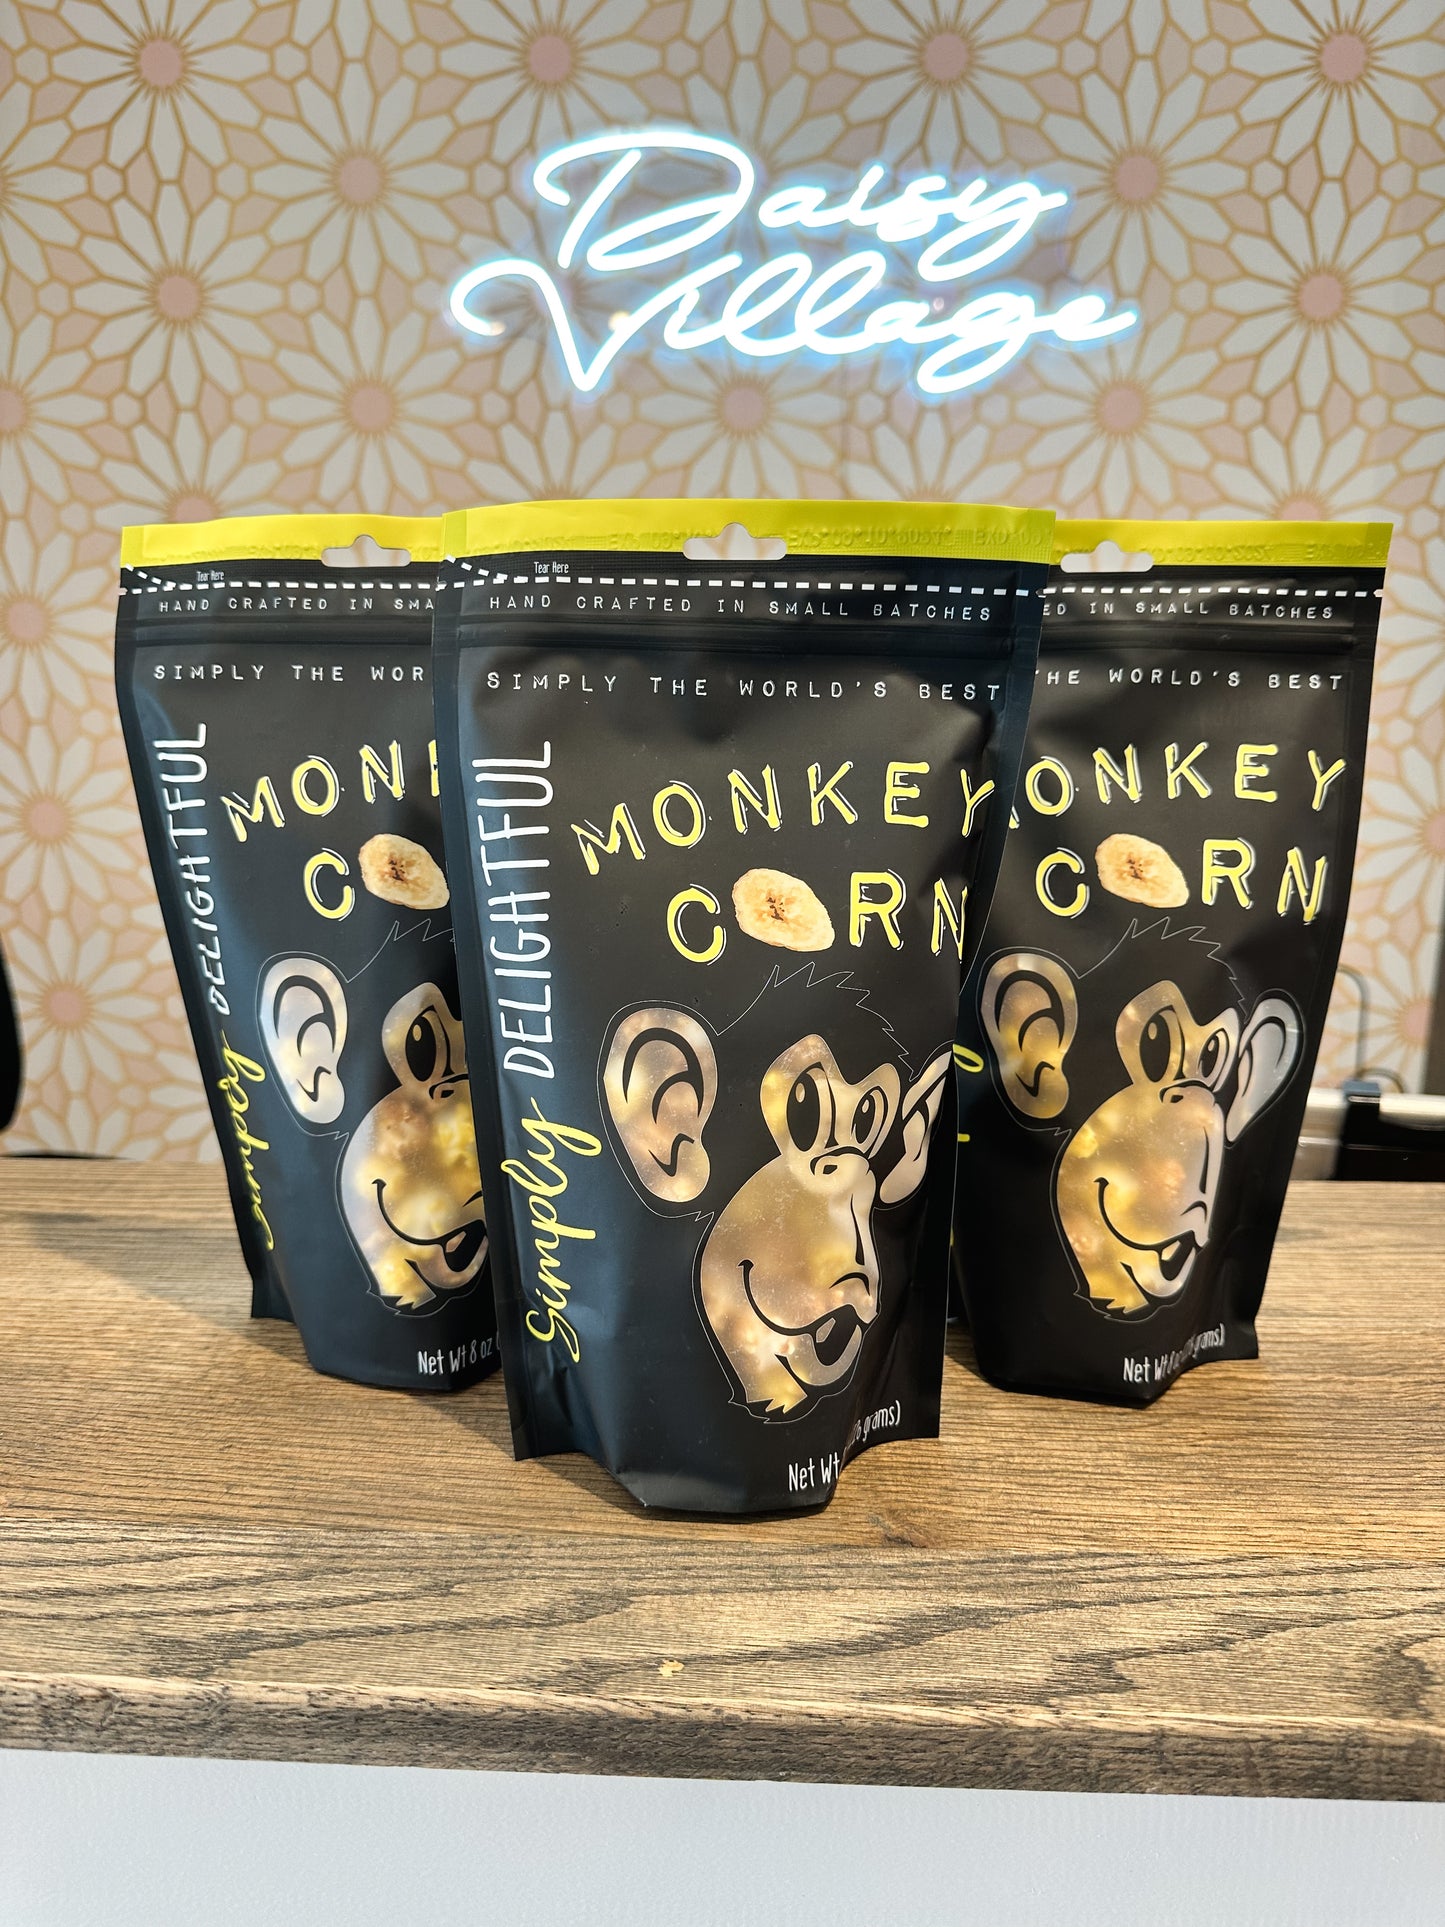 Monkey Corn (Caramel + Banana) Popcorn | 8 Oz.